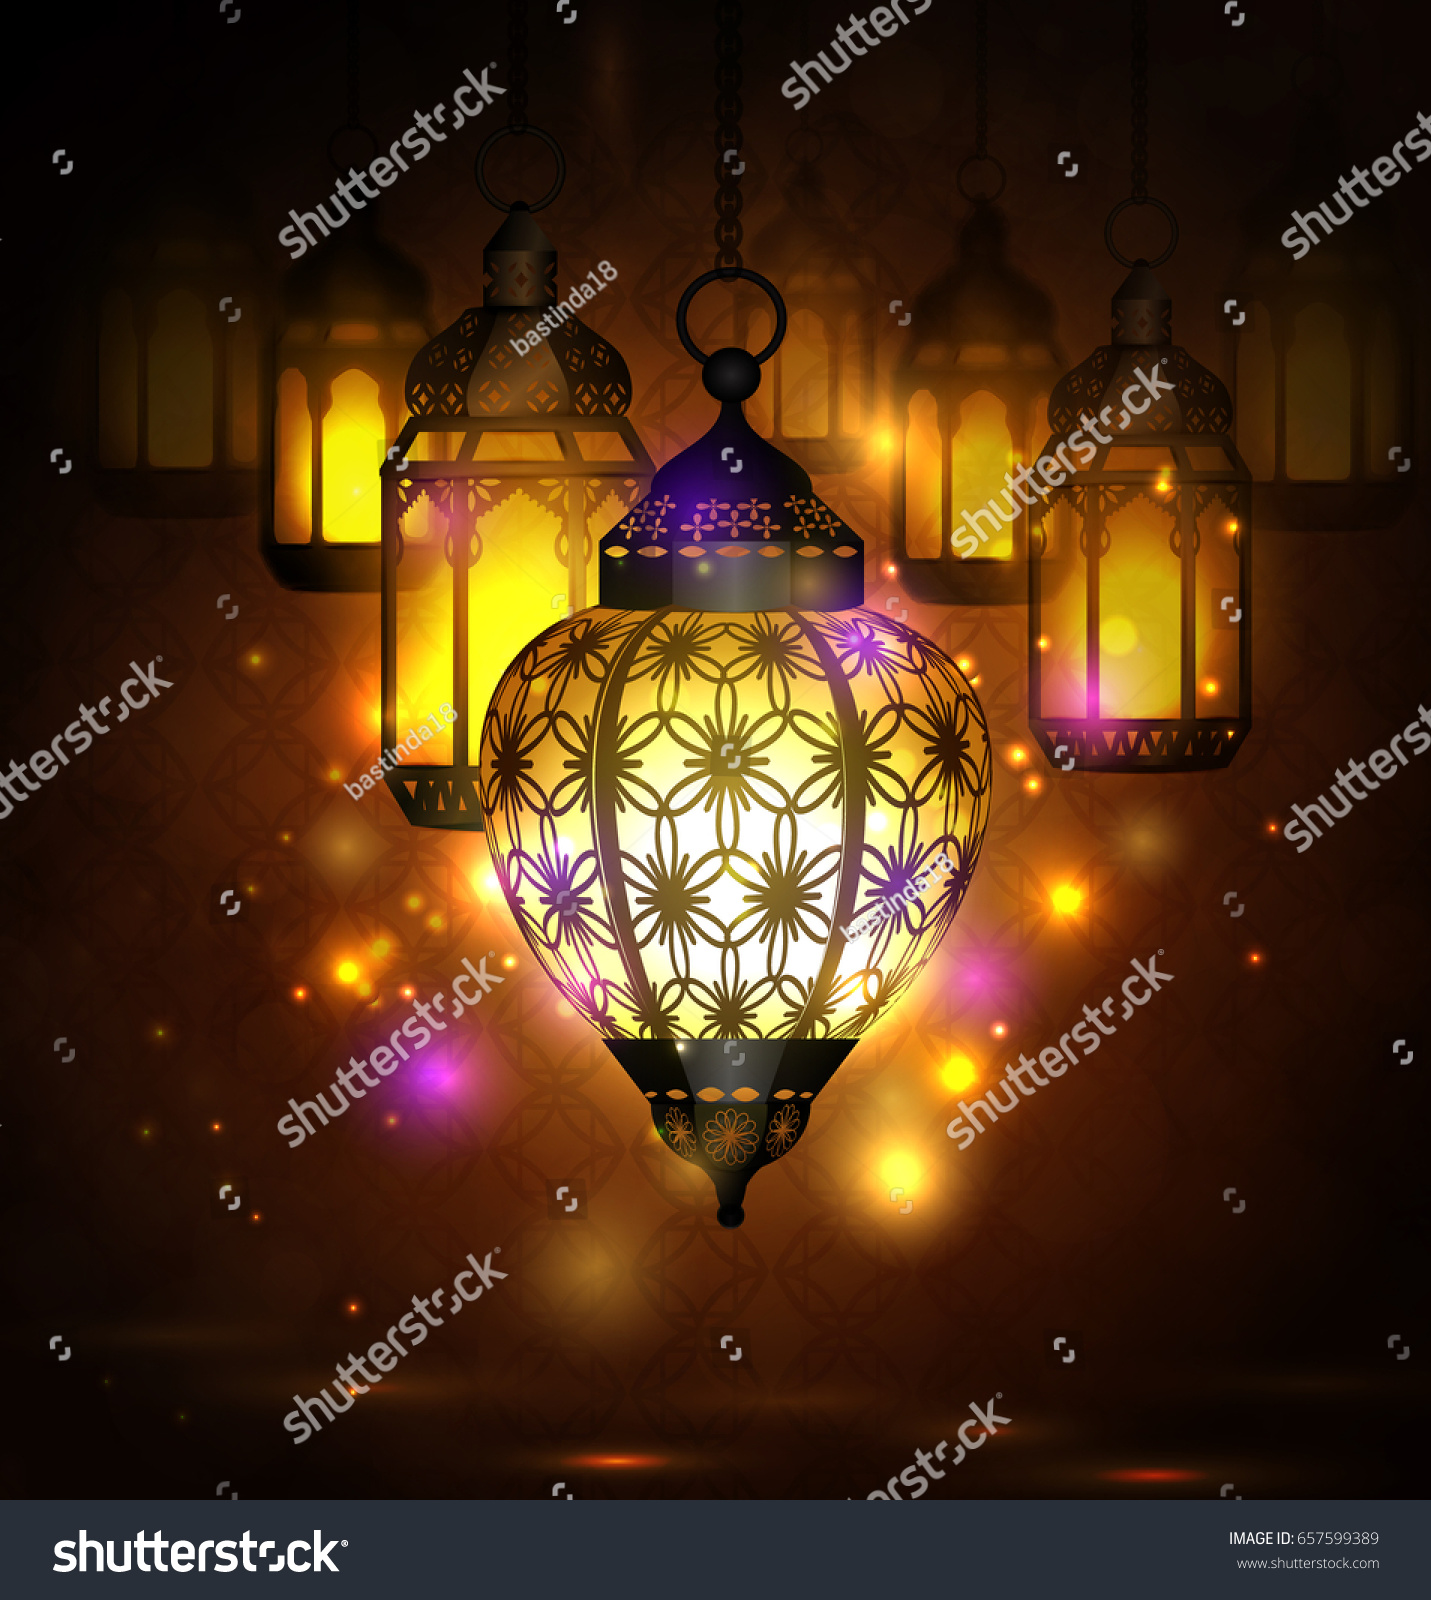 Intricate Arabic Lamps Lights Stock Vector 657599389 - Shutterstock